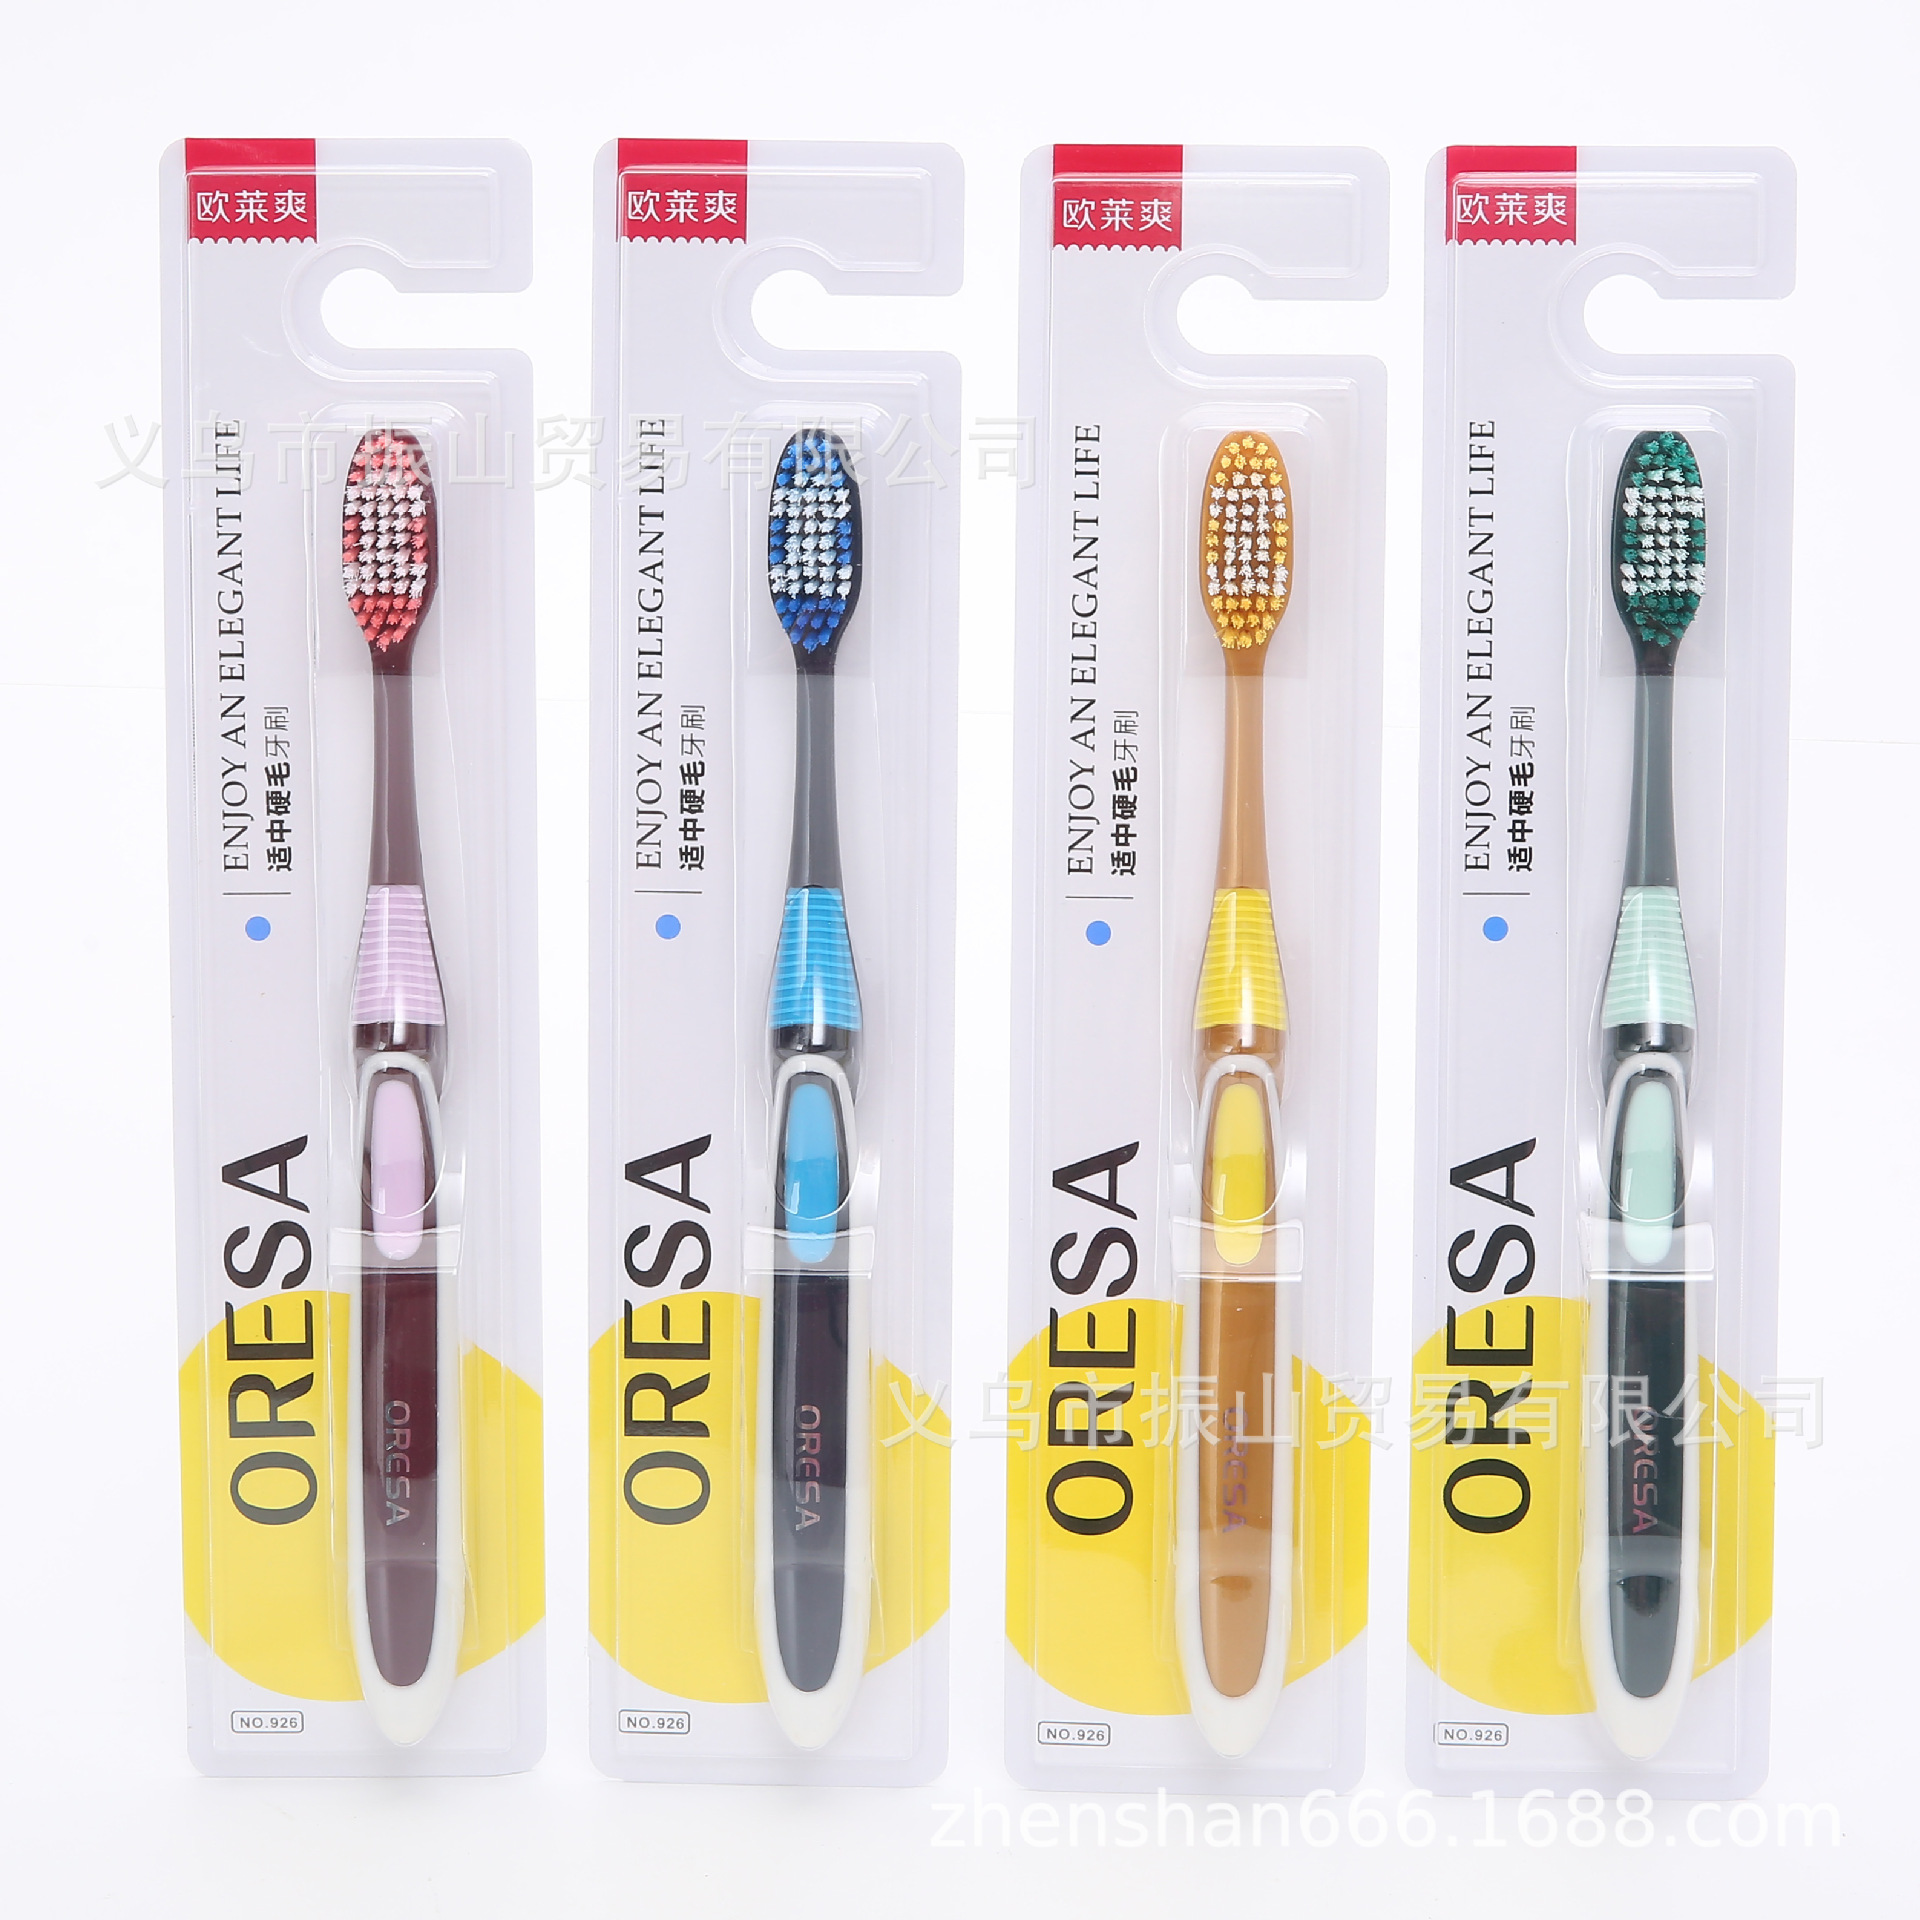 Olaishuang 926 Comfortable and Non-Slip Toothbrush Handle Refreshing Dazzling White R & D Medium Hair Toothbrush